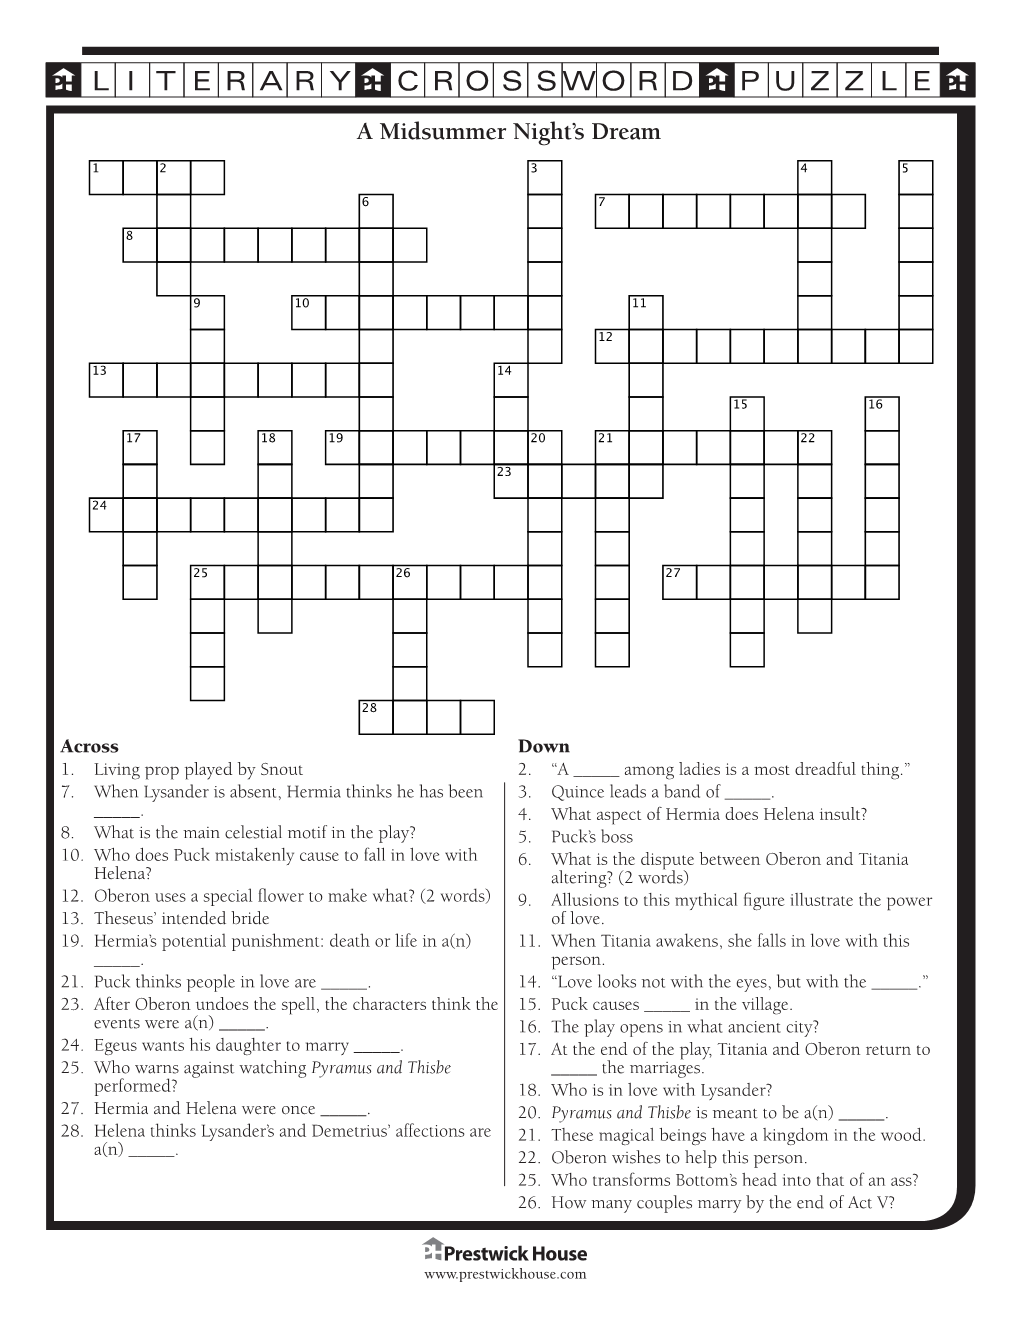 A Midsummer Night s Dream Crossword Puzzle DocsLib